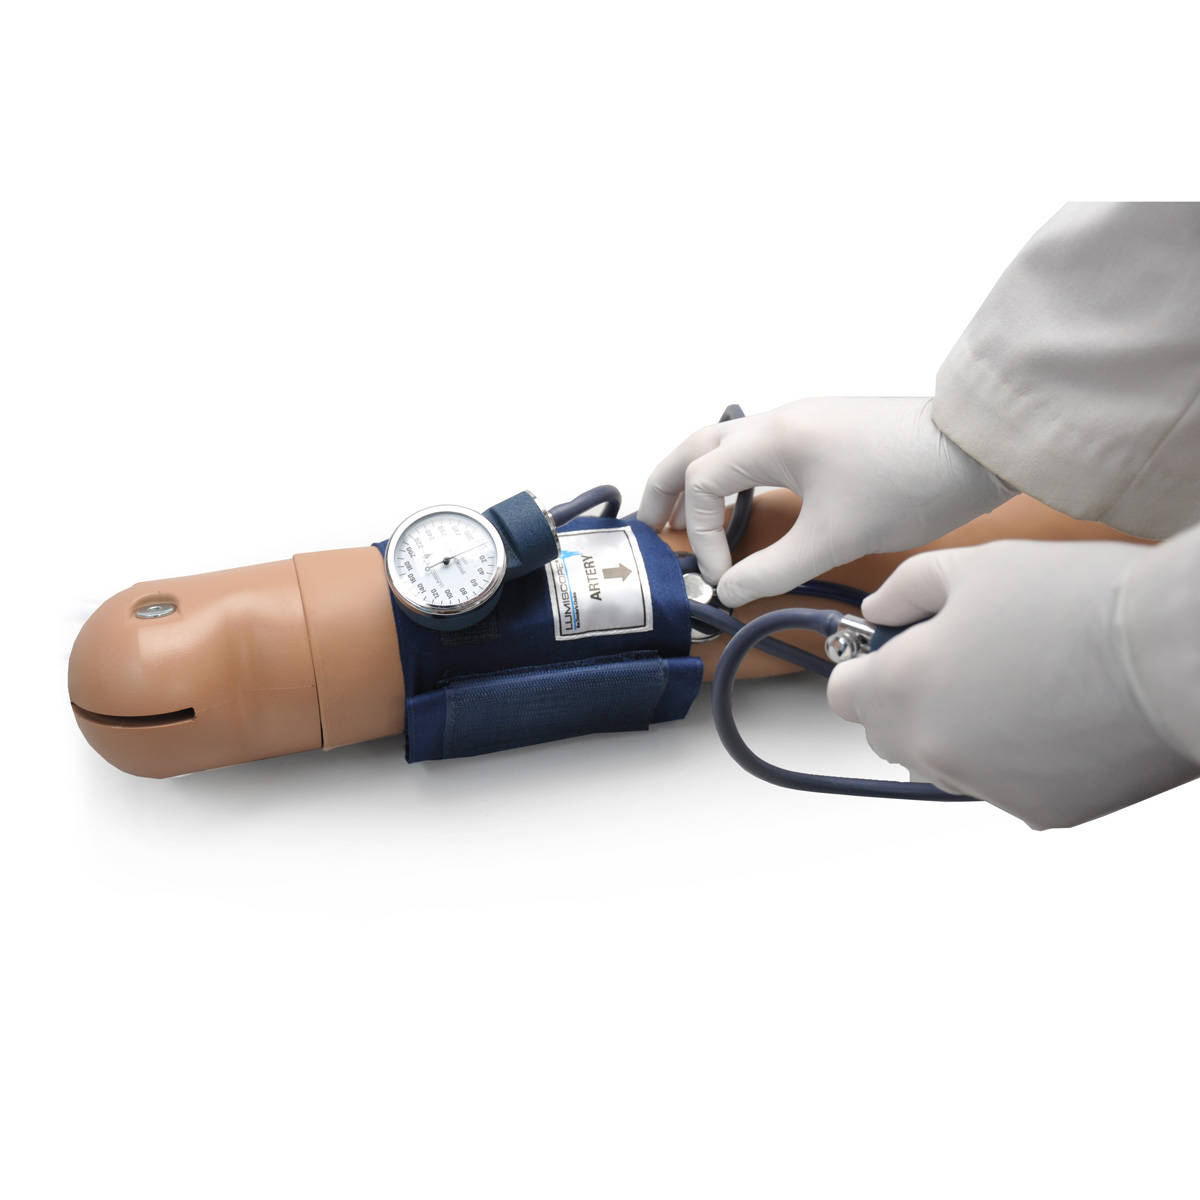 Blutdruck-Trainingssystem mit Omni, Bestellnummer 1018870, R11200, W45158-1, S415.M, Gaumard